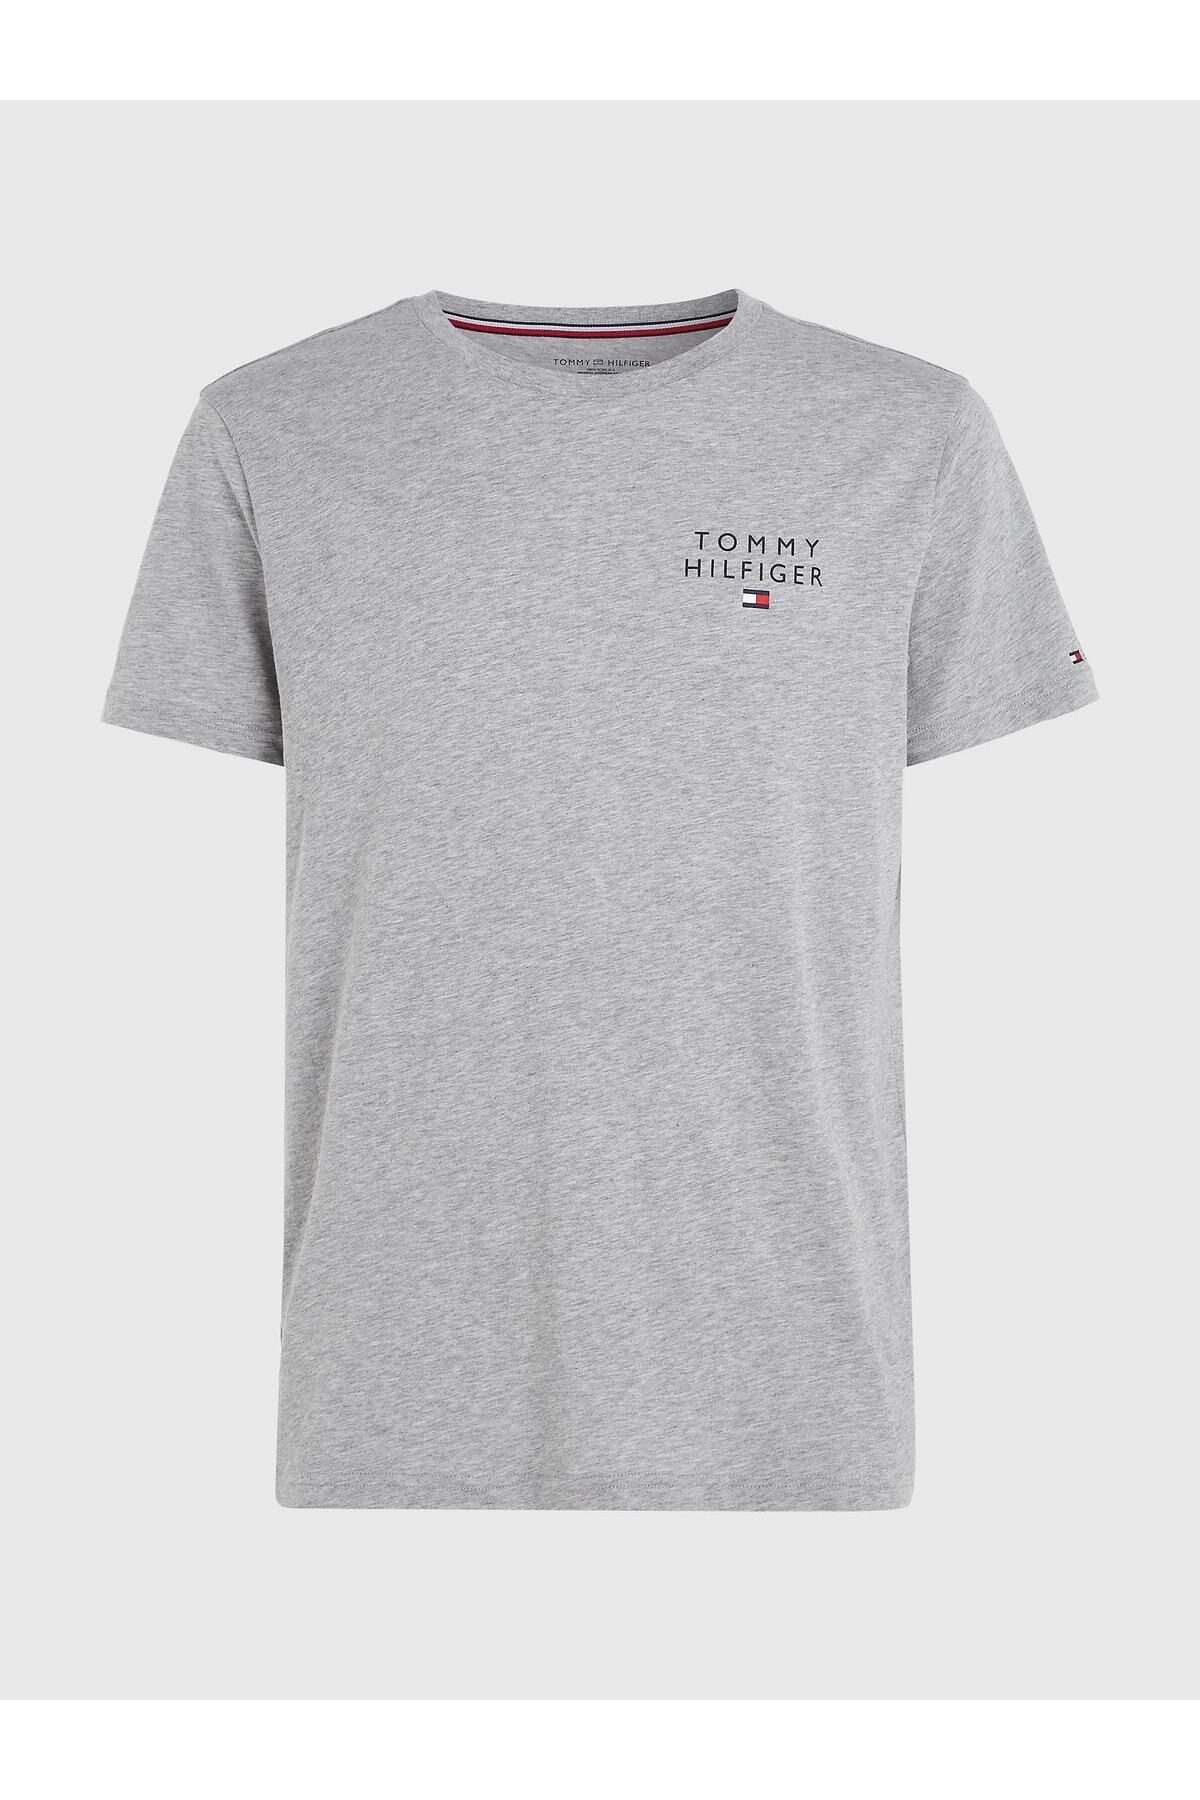 Tommy Hilfiger Erkek Dokuma Kumaş Kısa Kol Düz Model Gri T-Shirt UM0UM02916-P61